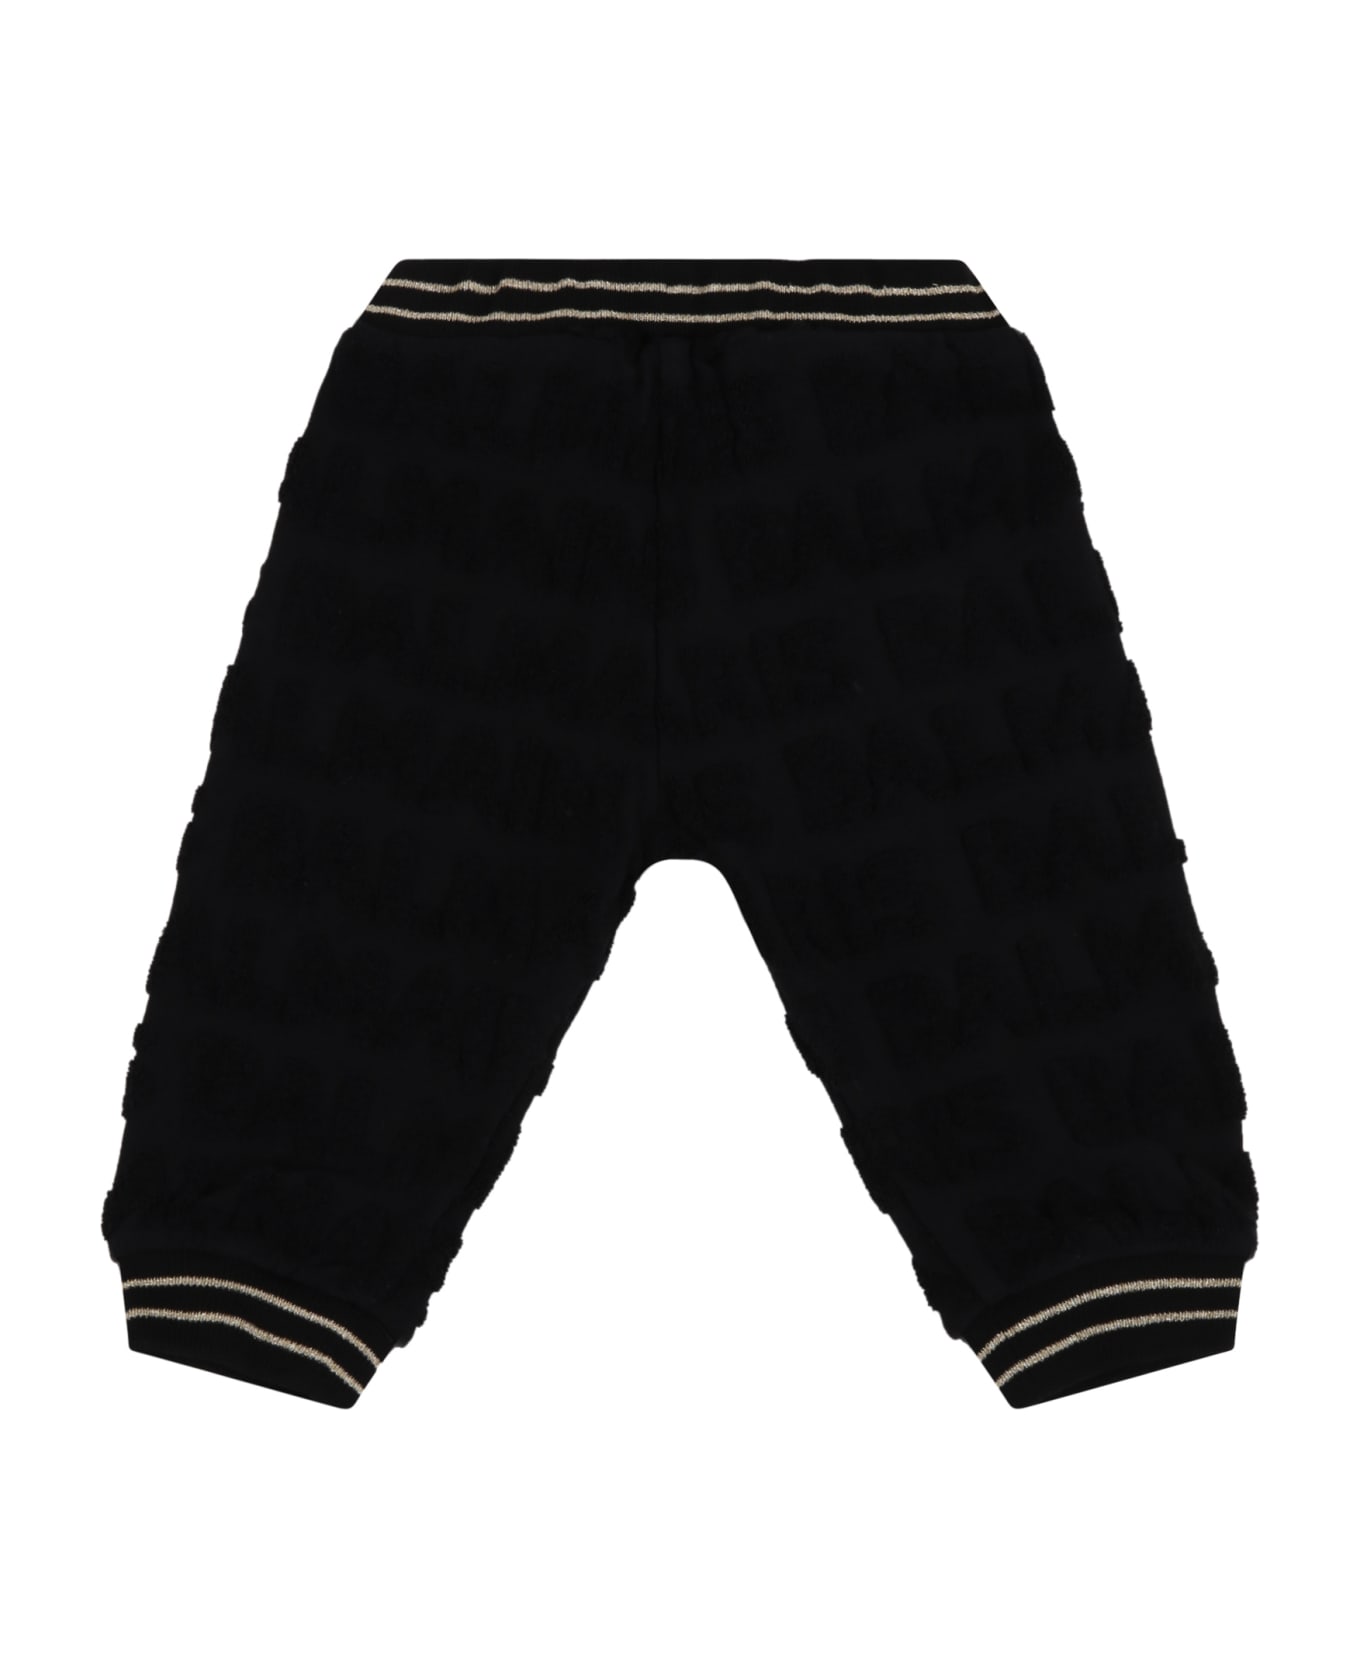 Balmain Black Trousers For Babykids With Logo - Black